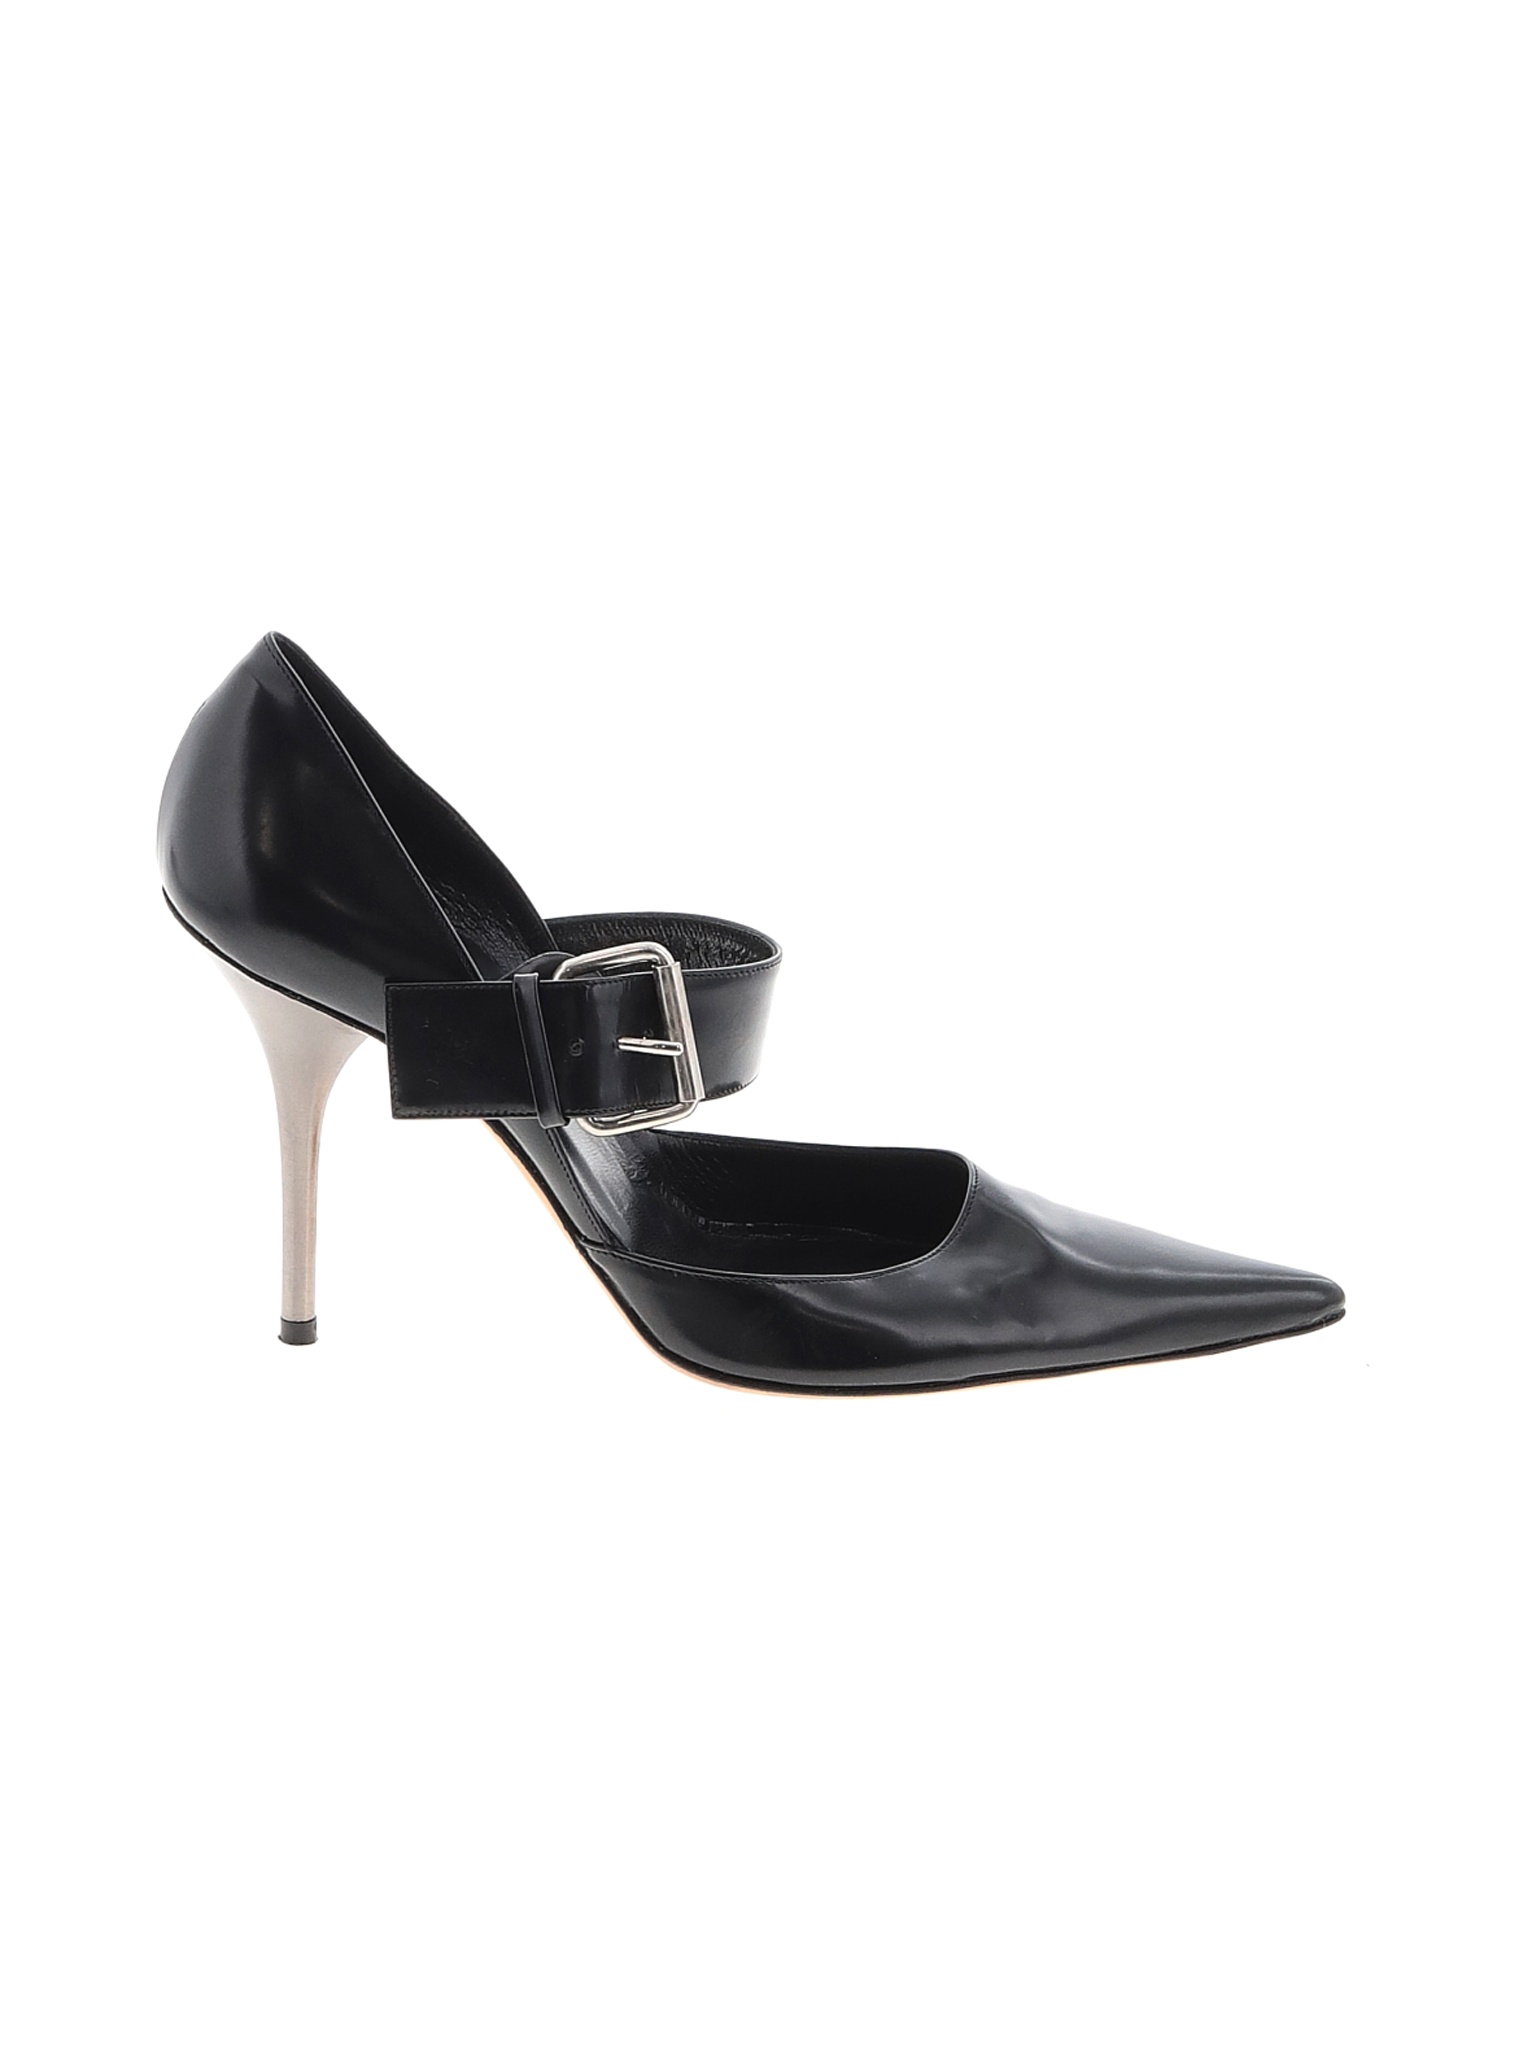 Michael Kors Women Black Heels US 8 | eBay